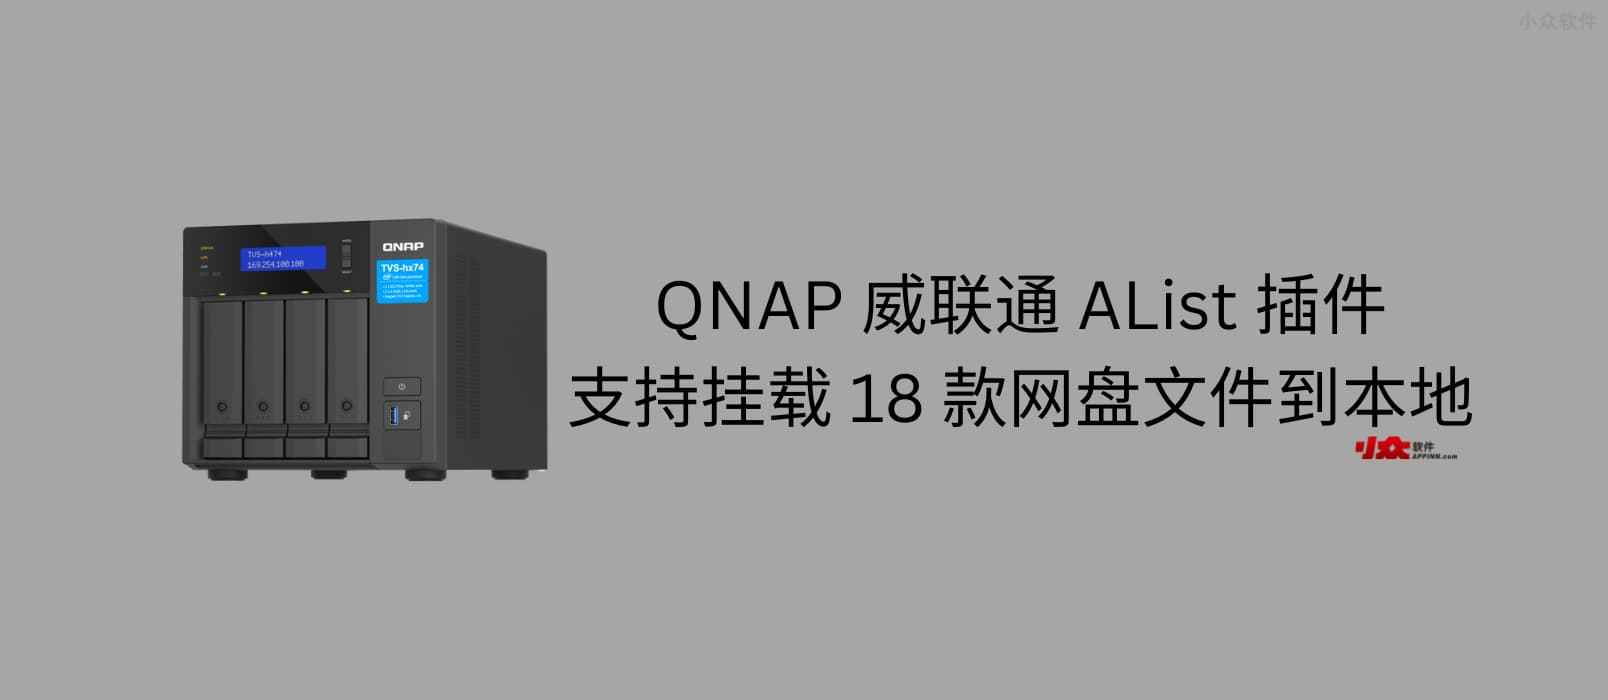 QNAP 威联通 AList 插件，支持挂载阿里云盘、百度网盘、PikPak、夸克网盘等到本地